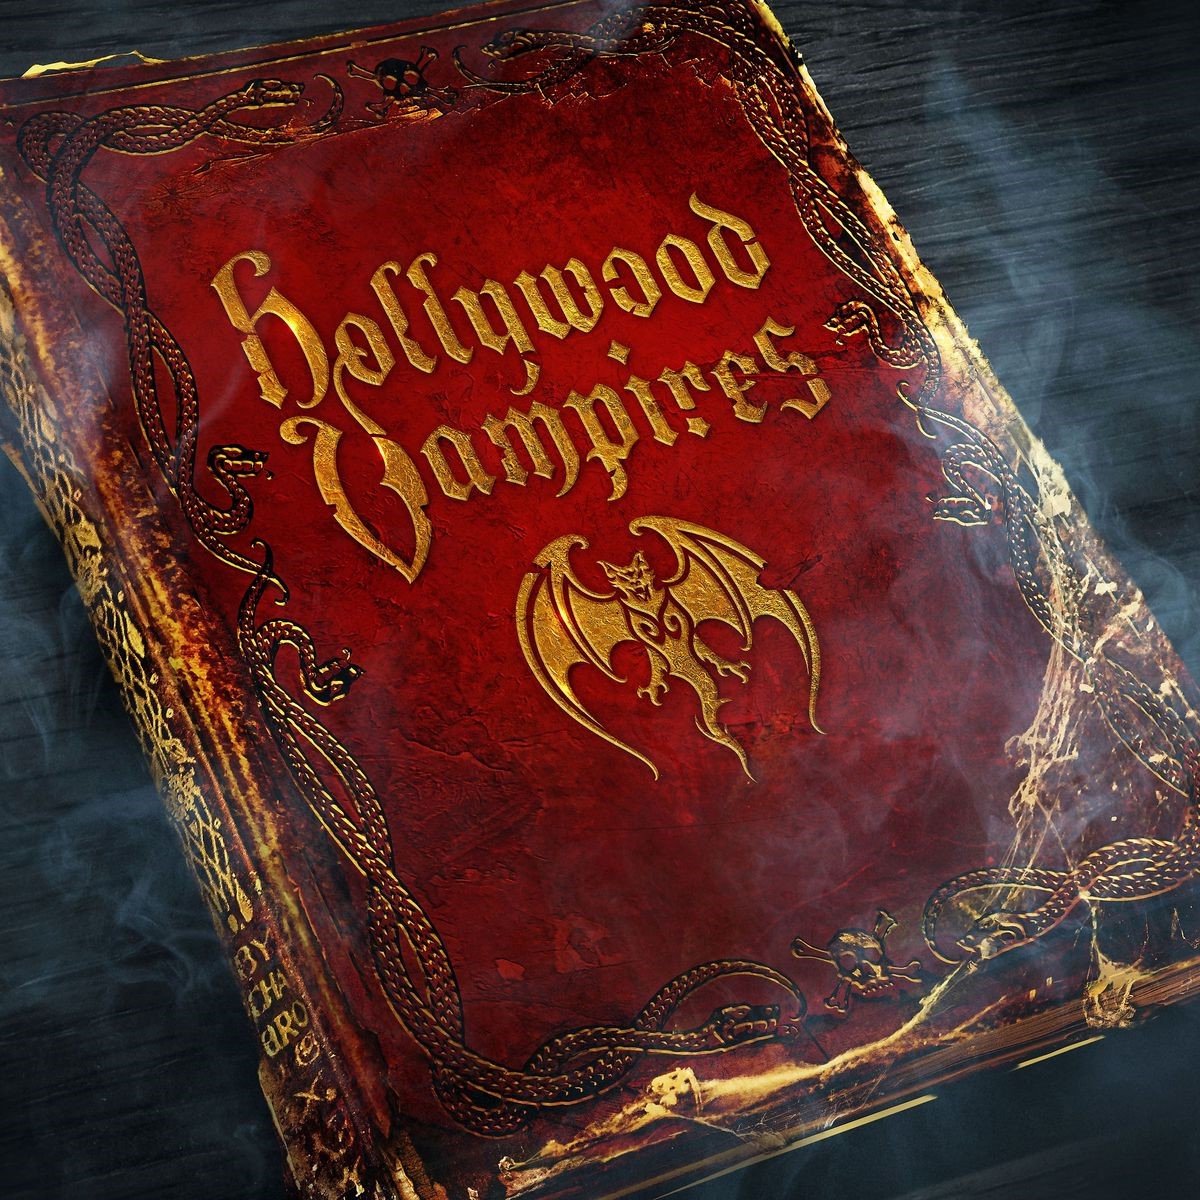 Hollywood Vampires - Hollywood Vampires (CD) - Hollywood Vampires